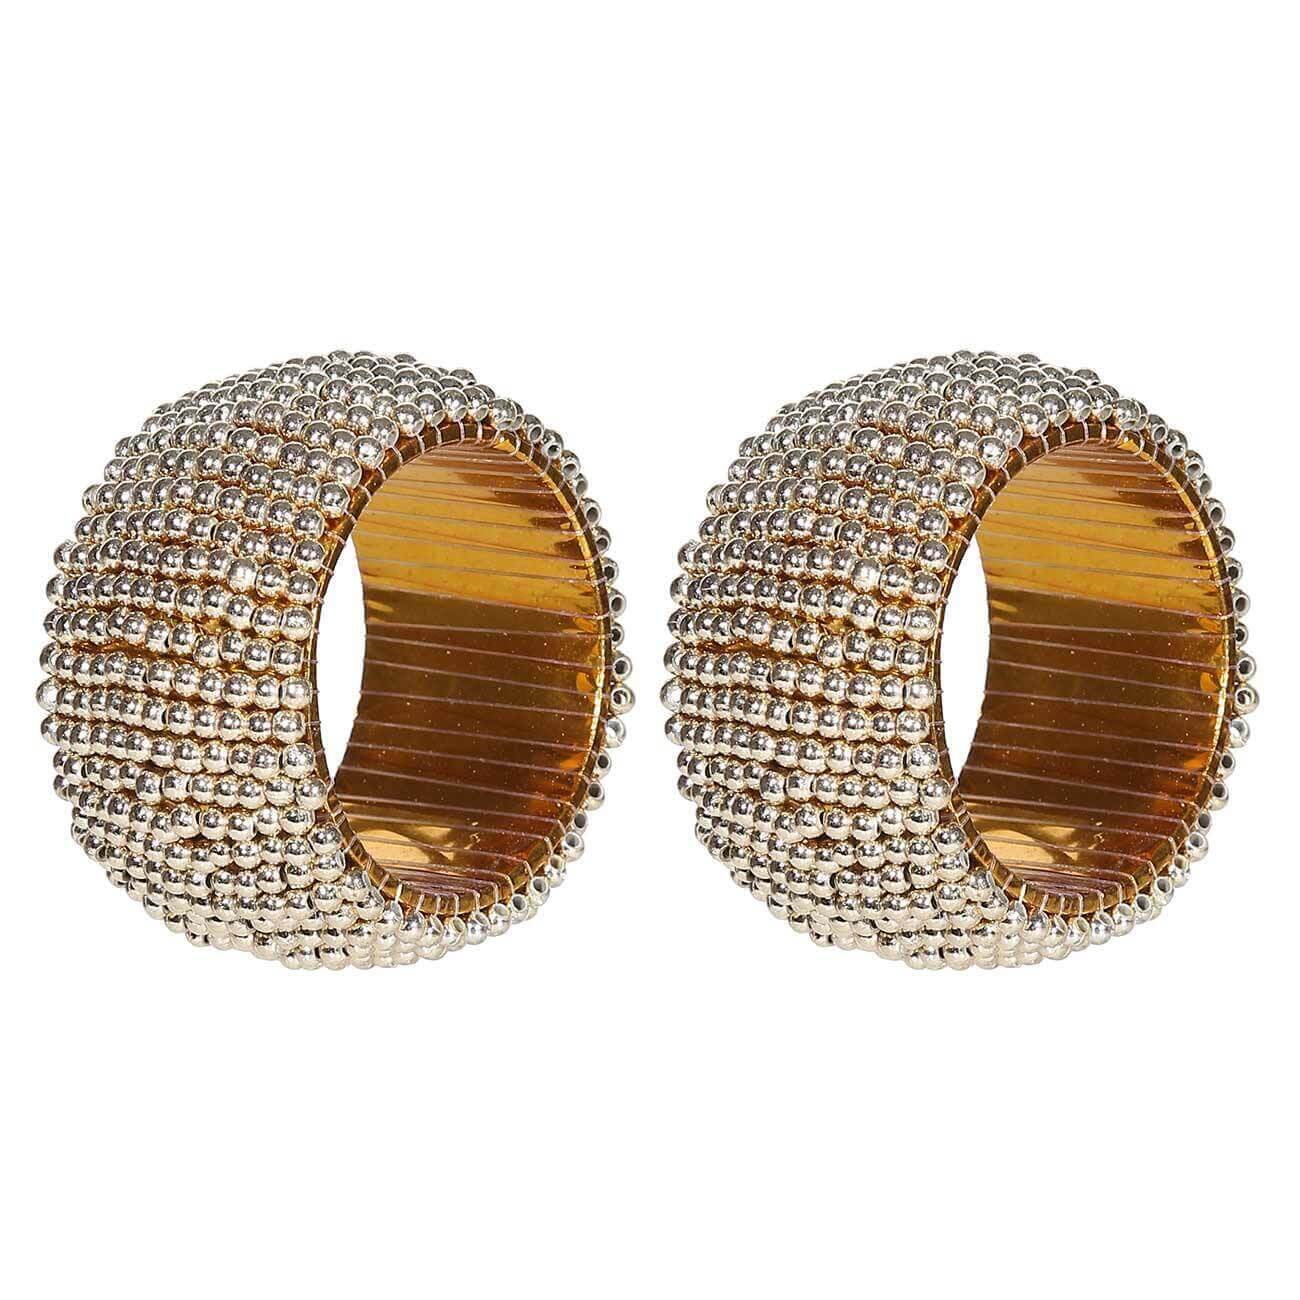 кольцо для салфеток vagabond house белка на ветке 4 5х6 5х5 см Кольцо для салфеток, 5 см, 2 шт, бисер, круглое, золотистое, Shiny beads